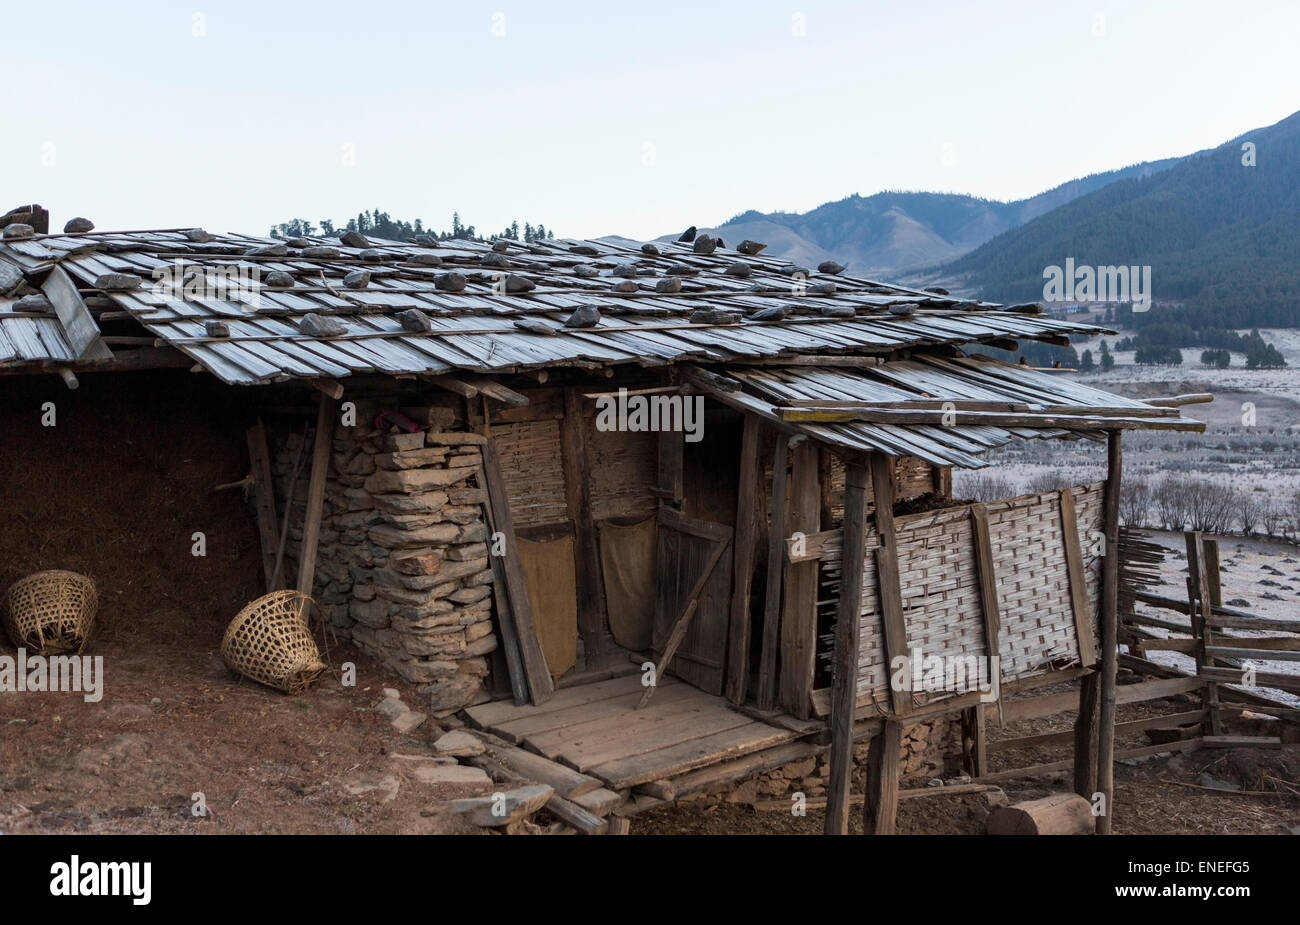 Farm shed roof held down with rocks, Phobjikha Valley, Western Bhutan, Asia Stock Photo